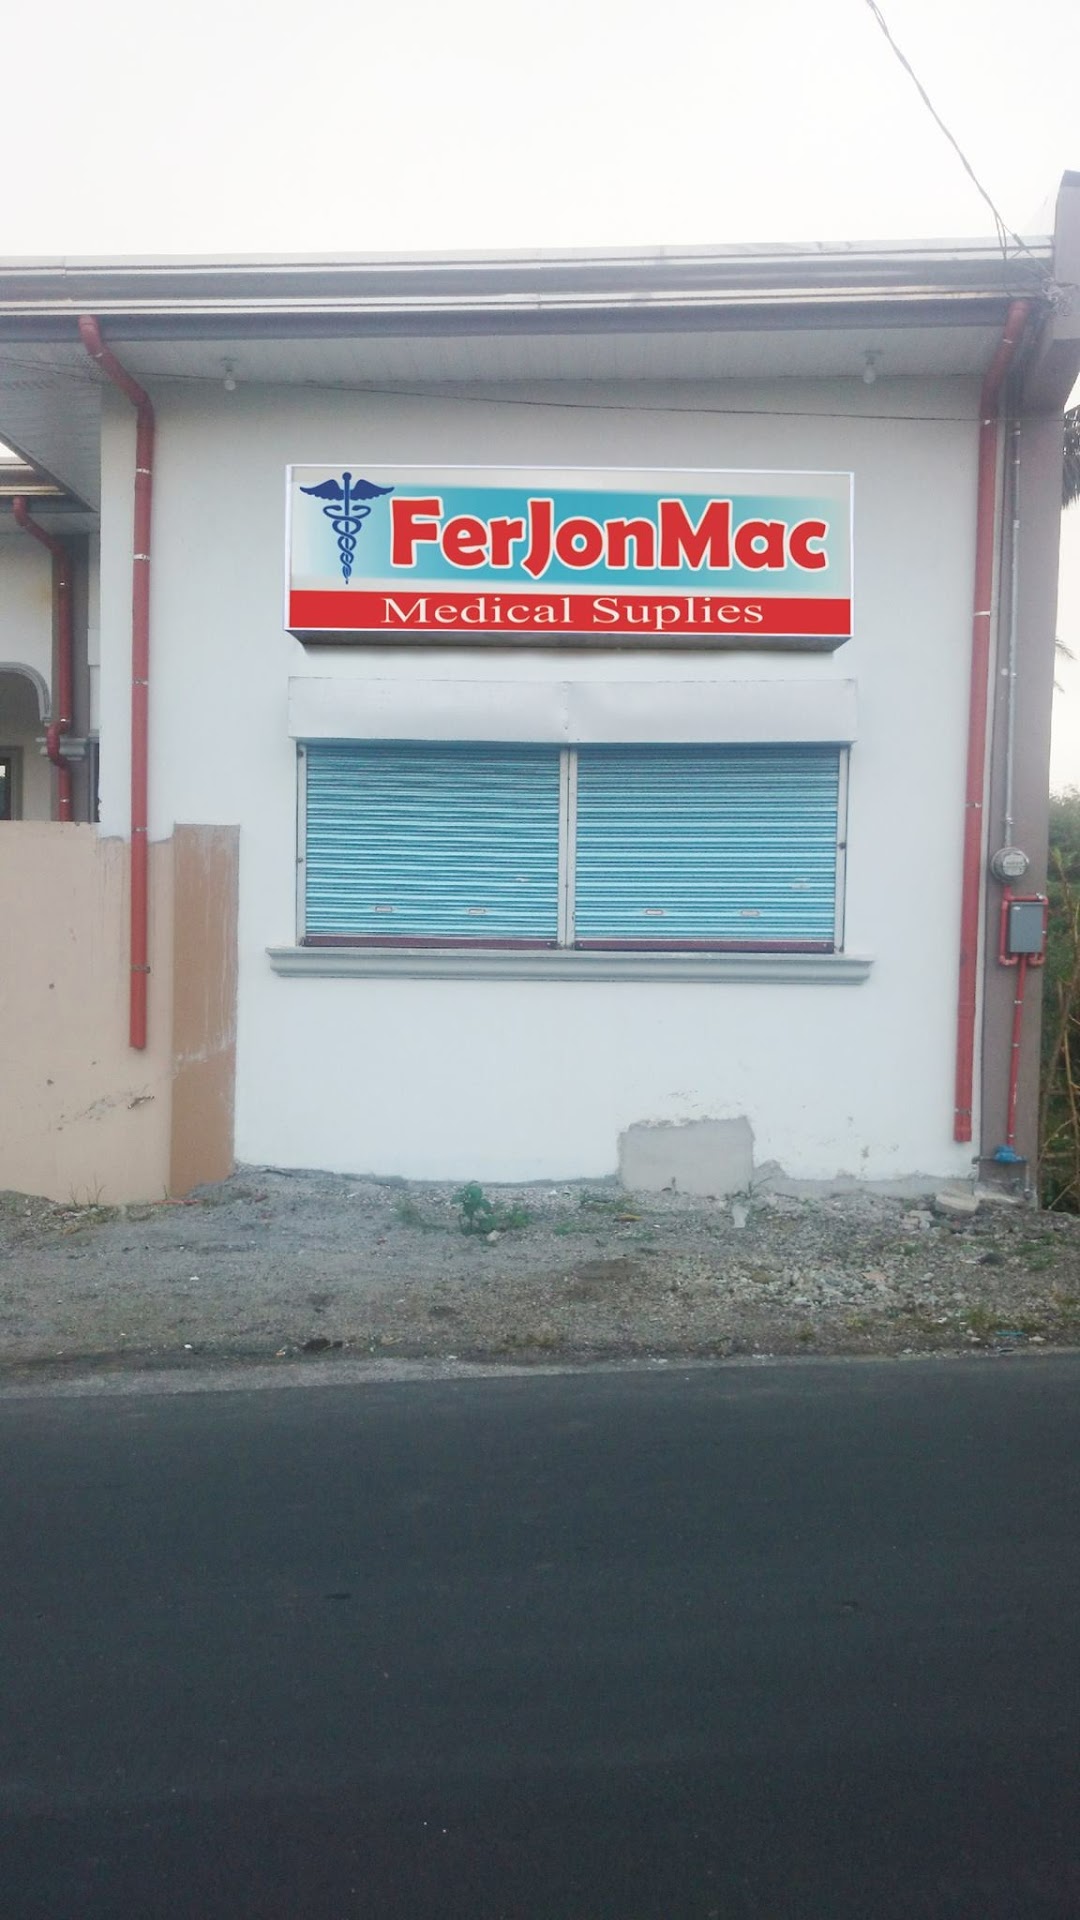 Ferjonmac Medical Supplies